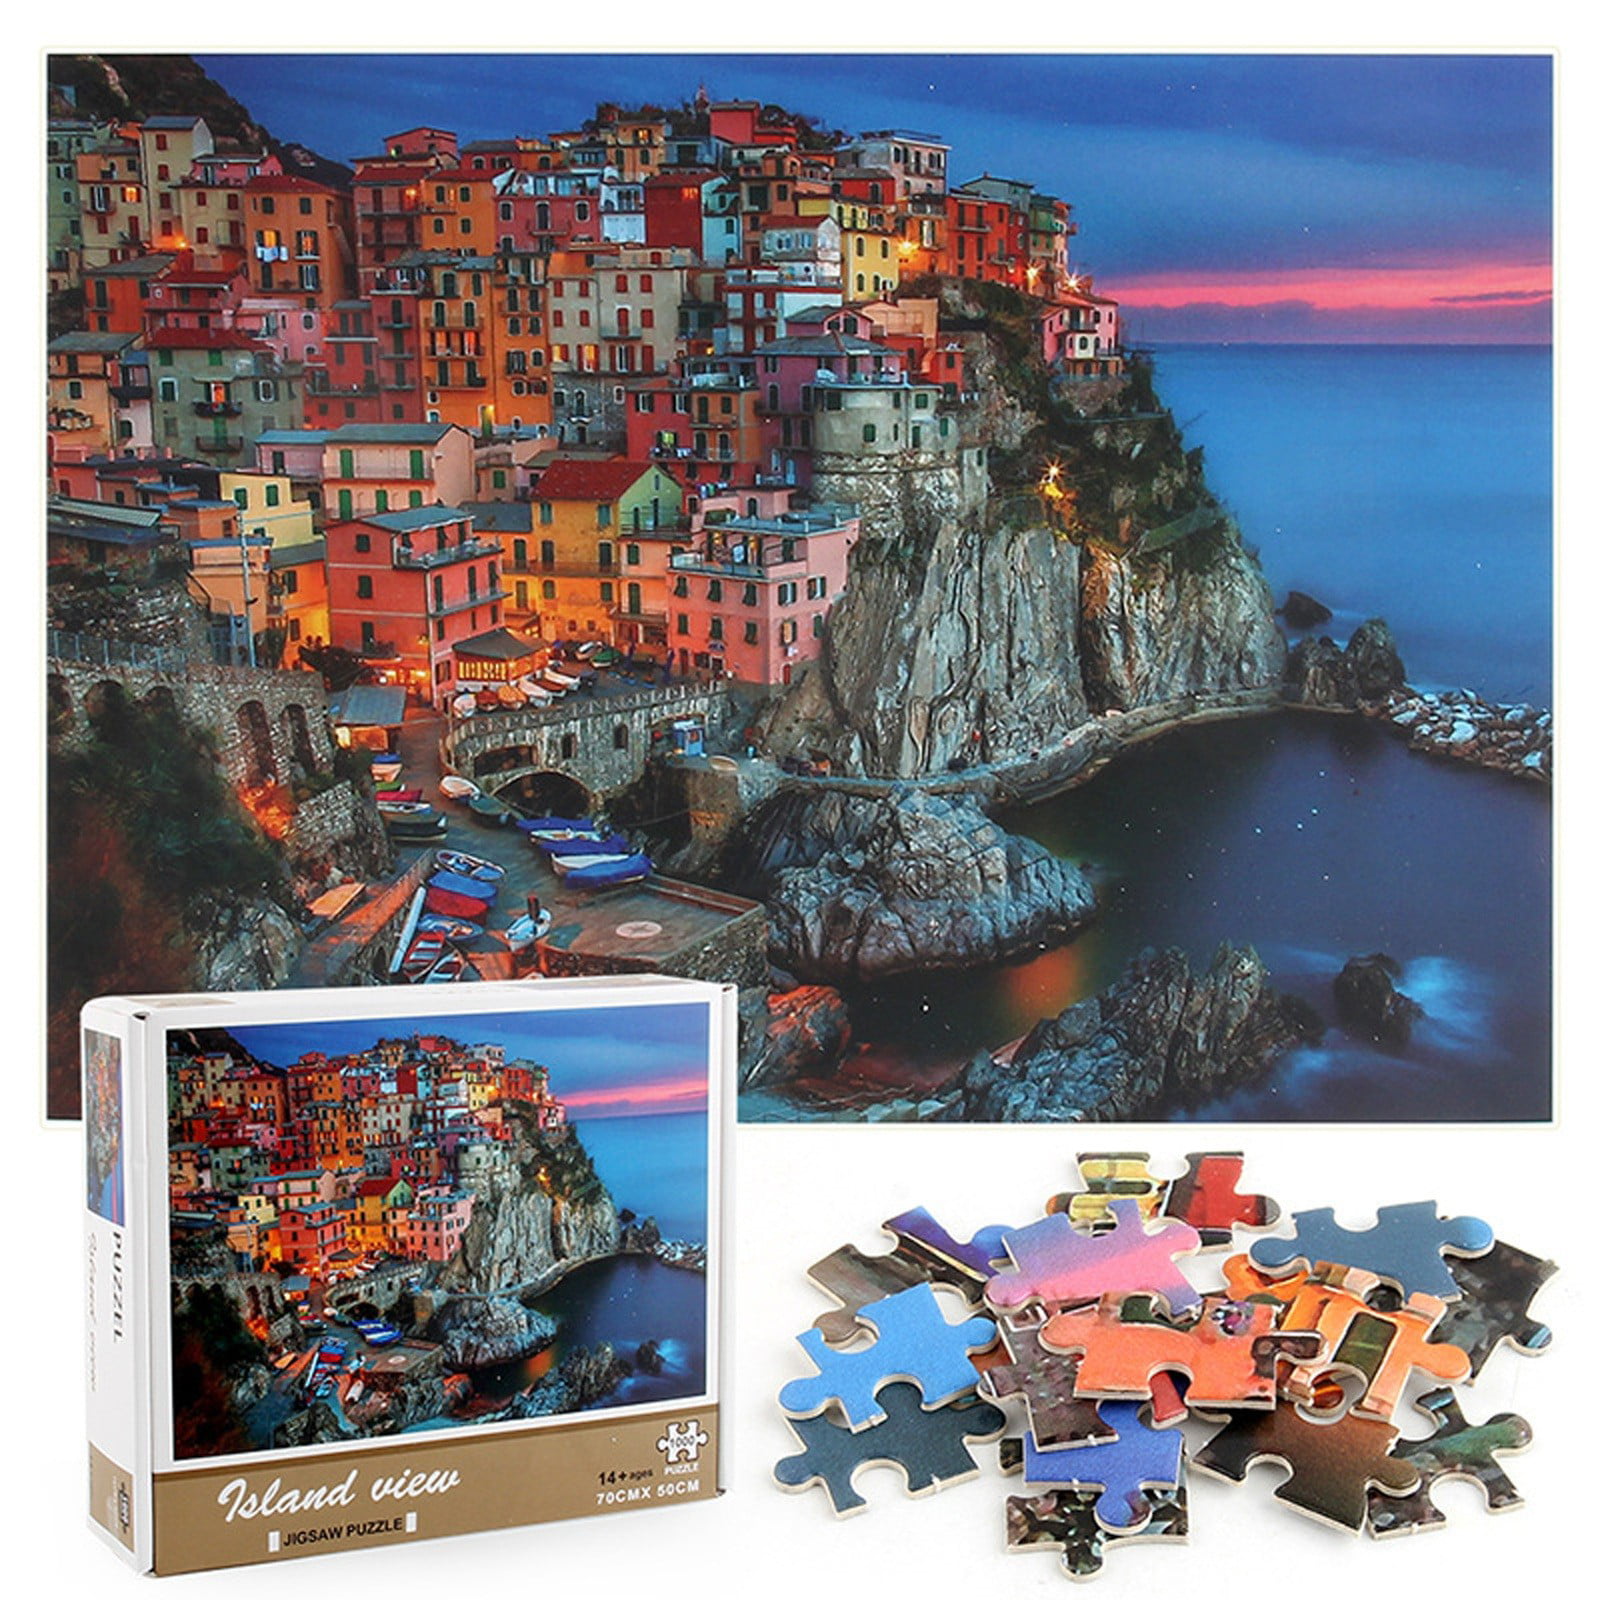 Details about   1000 Piece Landscape Jigsaw Puzzles Adult Kids Educational Puzzle Gift New US 